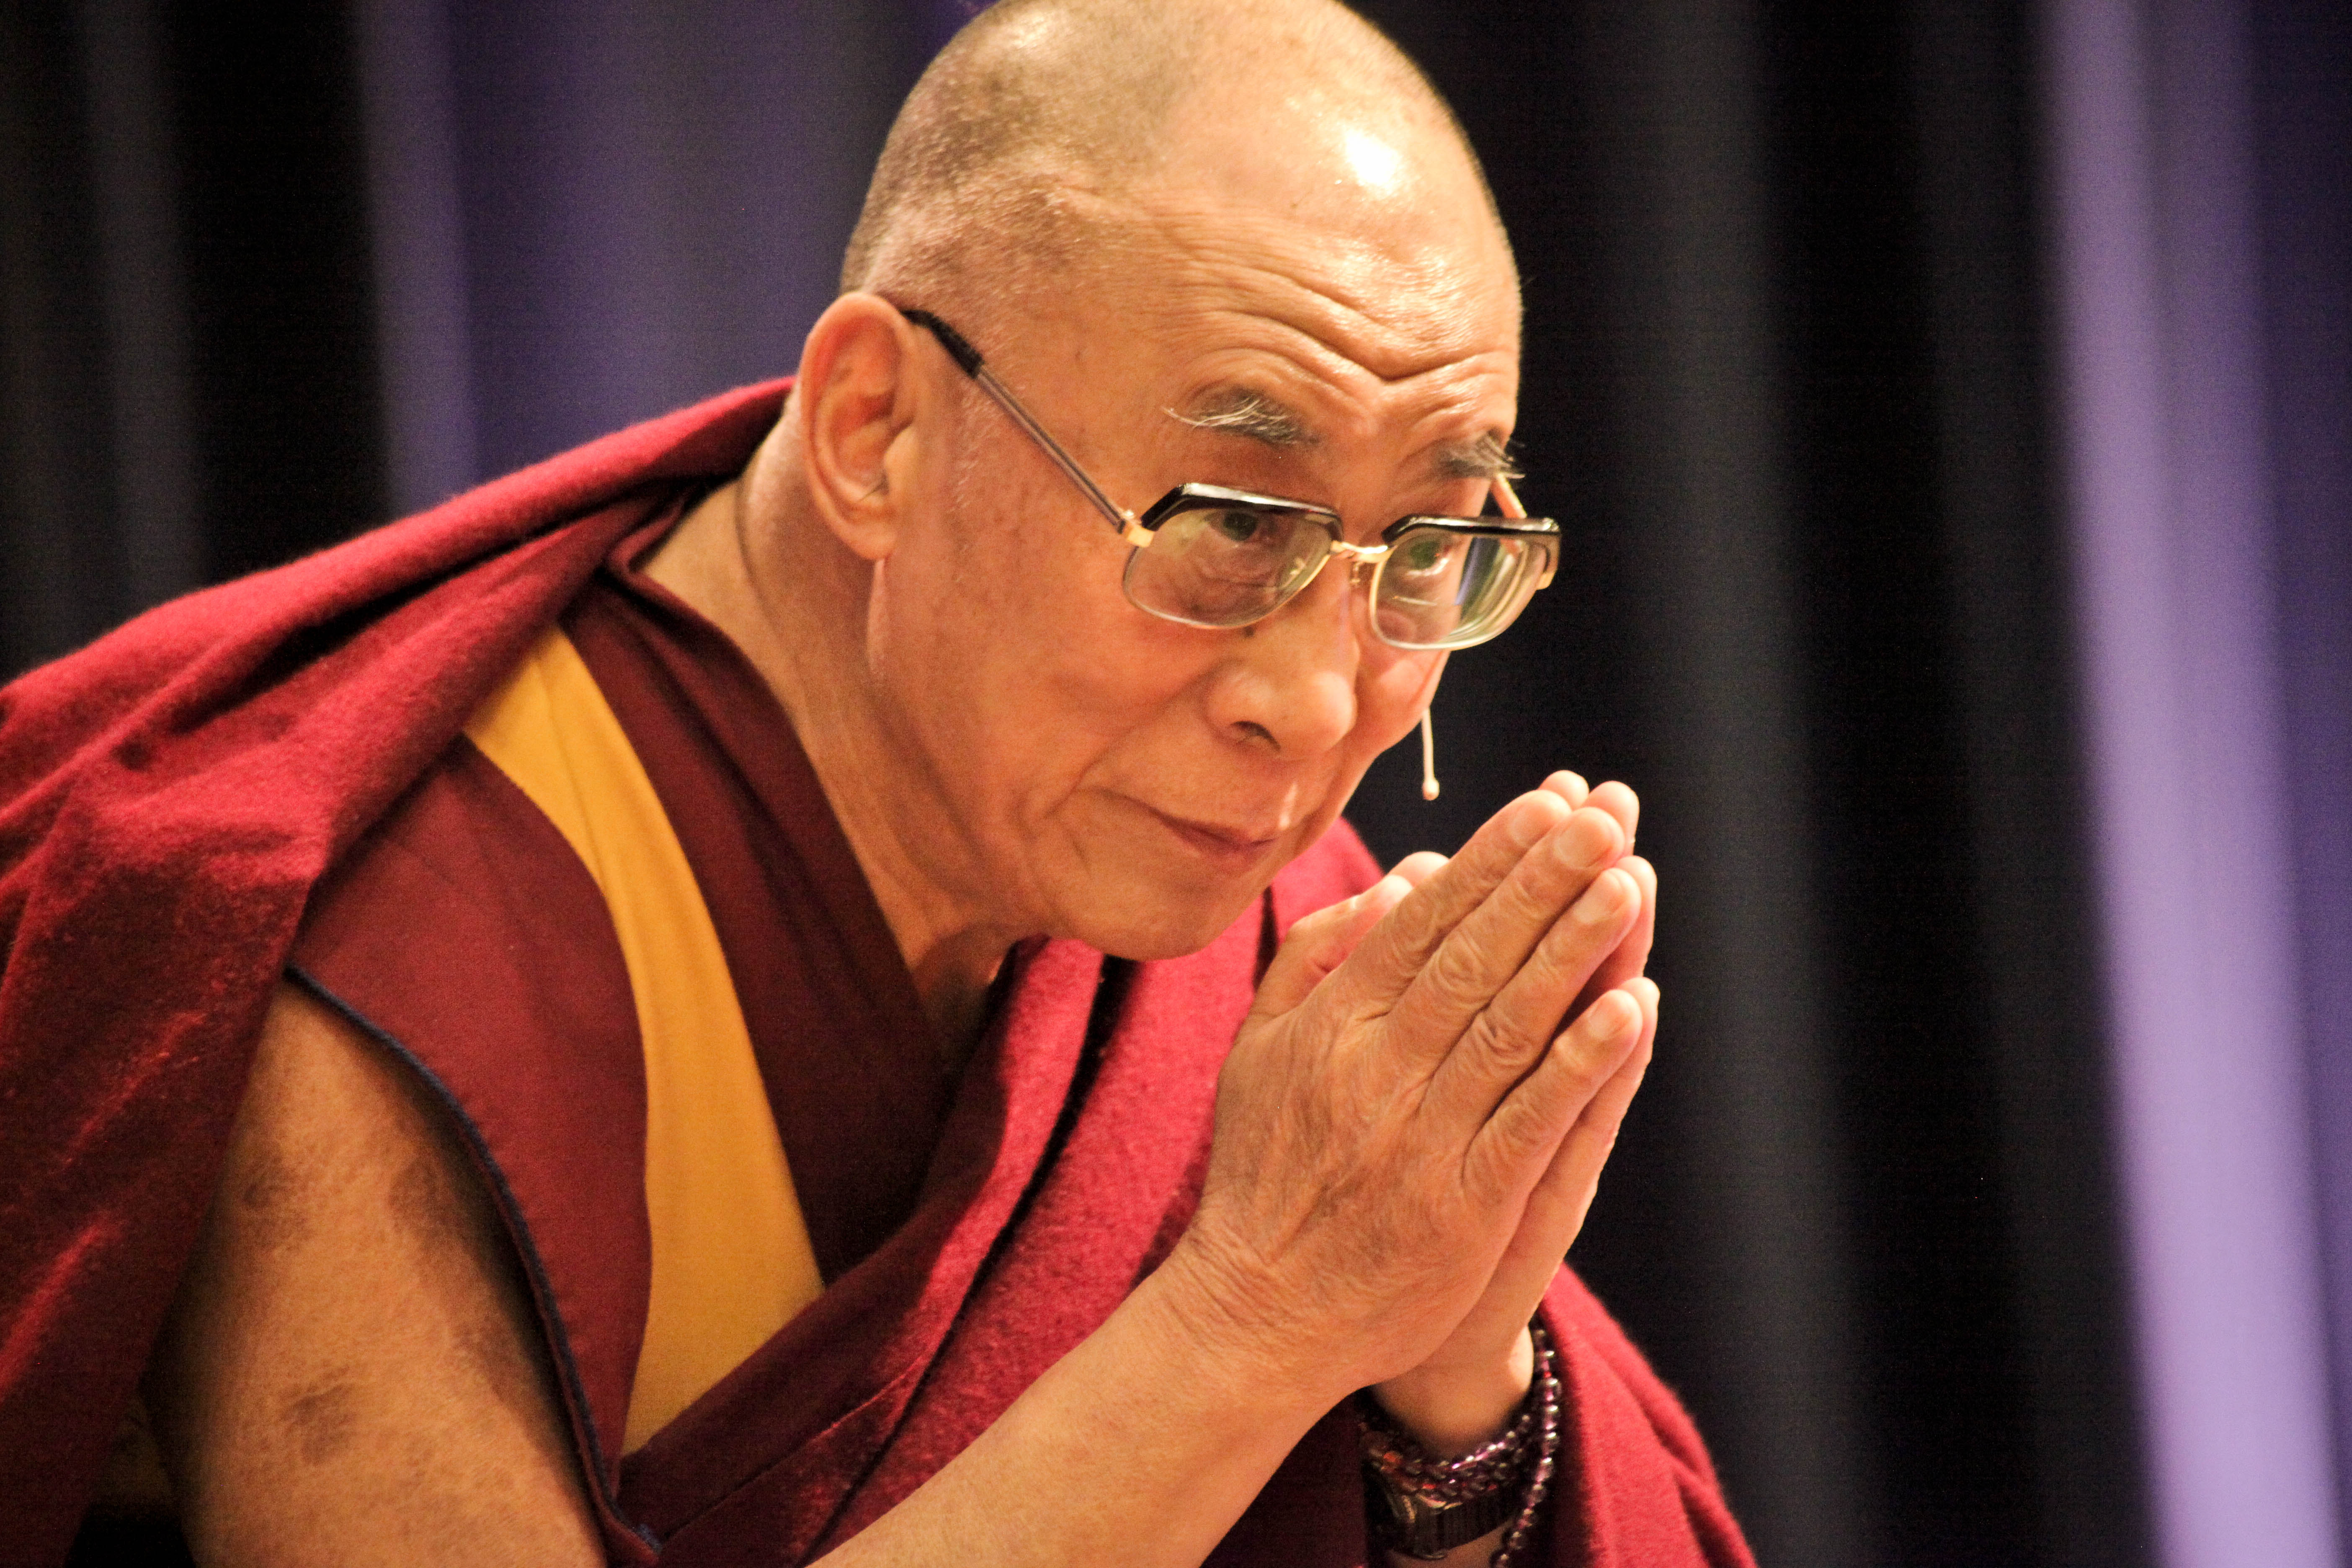 The 14th and current Dalai Lama, Tenzin Gyatso. Photo: Erik Horner, used under Creative Commons Licence